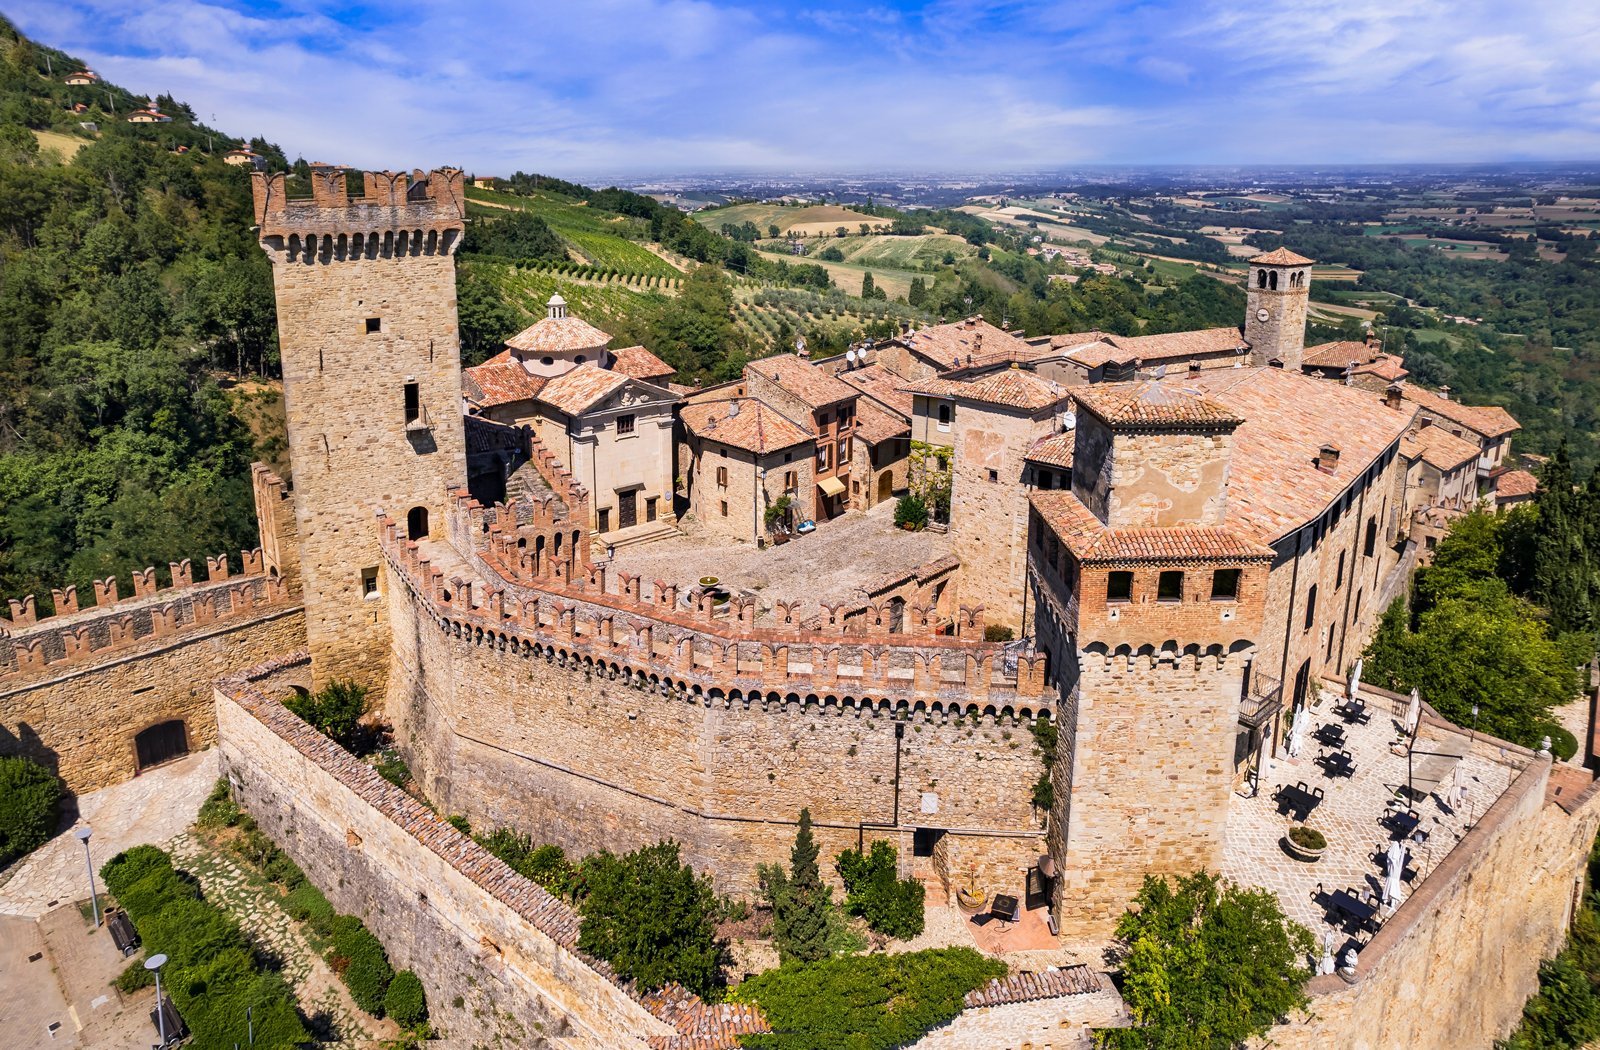 Vigoleno, a picturesque fortified village in the so-called Castelli del Ducato region outside Parma